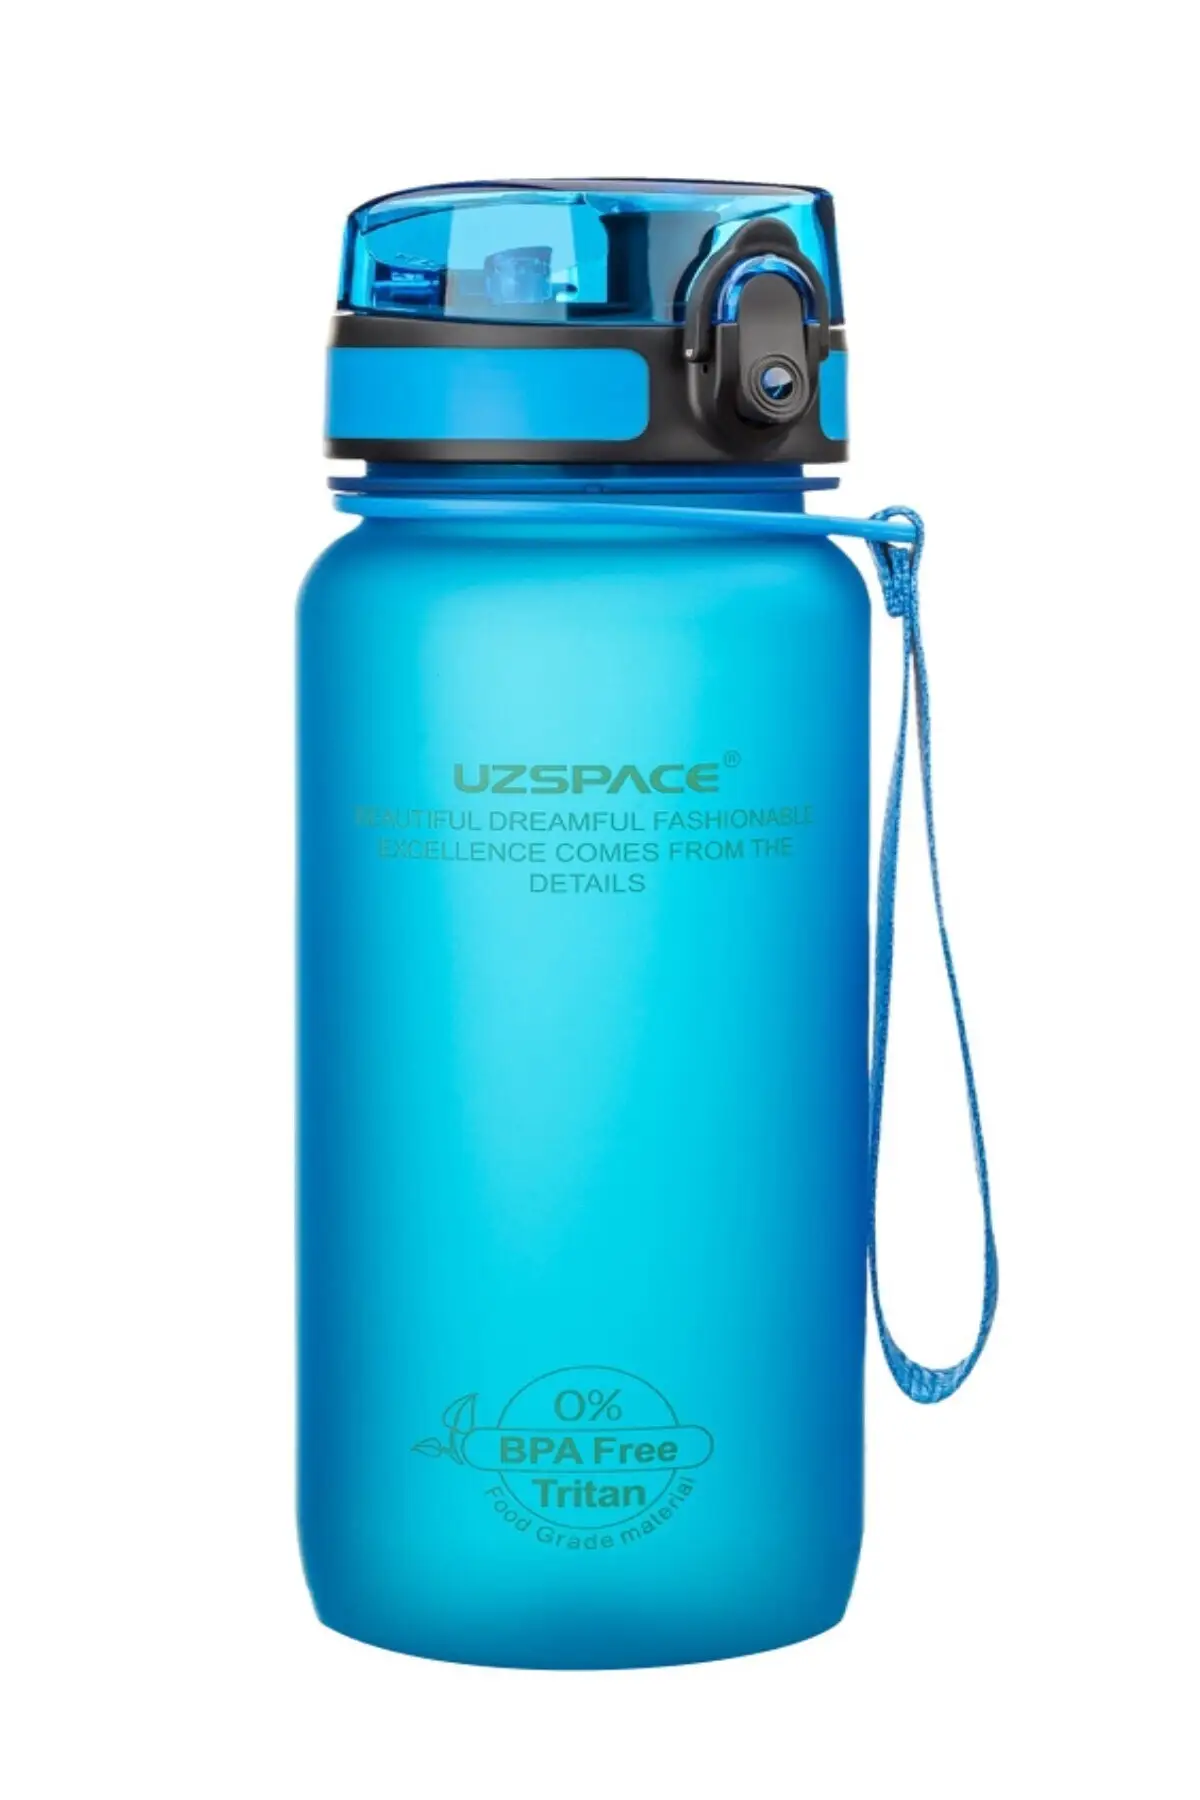 Бутылка для воды uzspace. UZSPACE бутылка для воды. Спортивная бутылка для воды UZSPACE. UZSPACE 3026 фляга. Спортивная бутылка, 3026 UZSPACE.